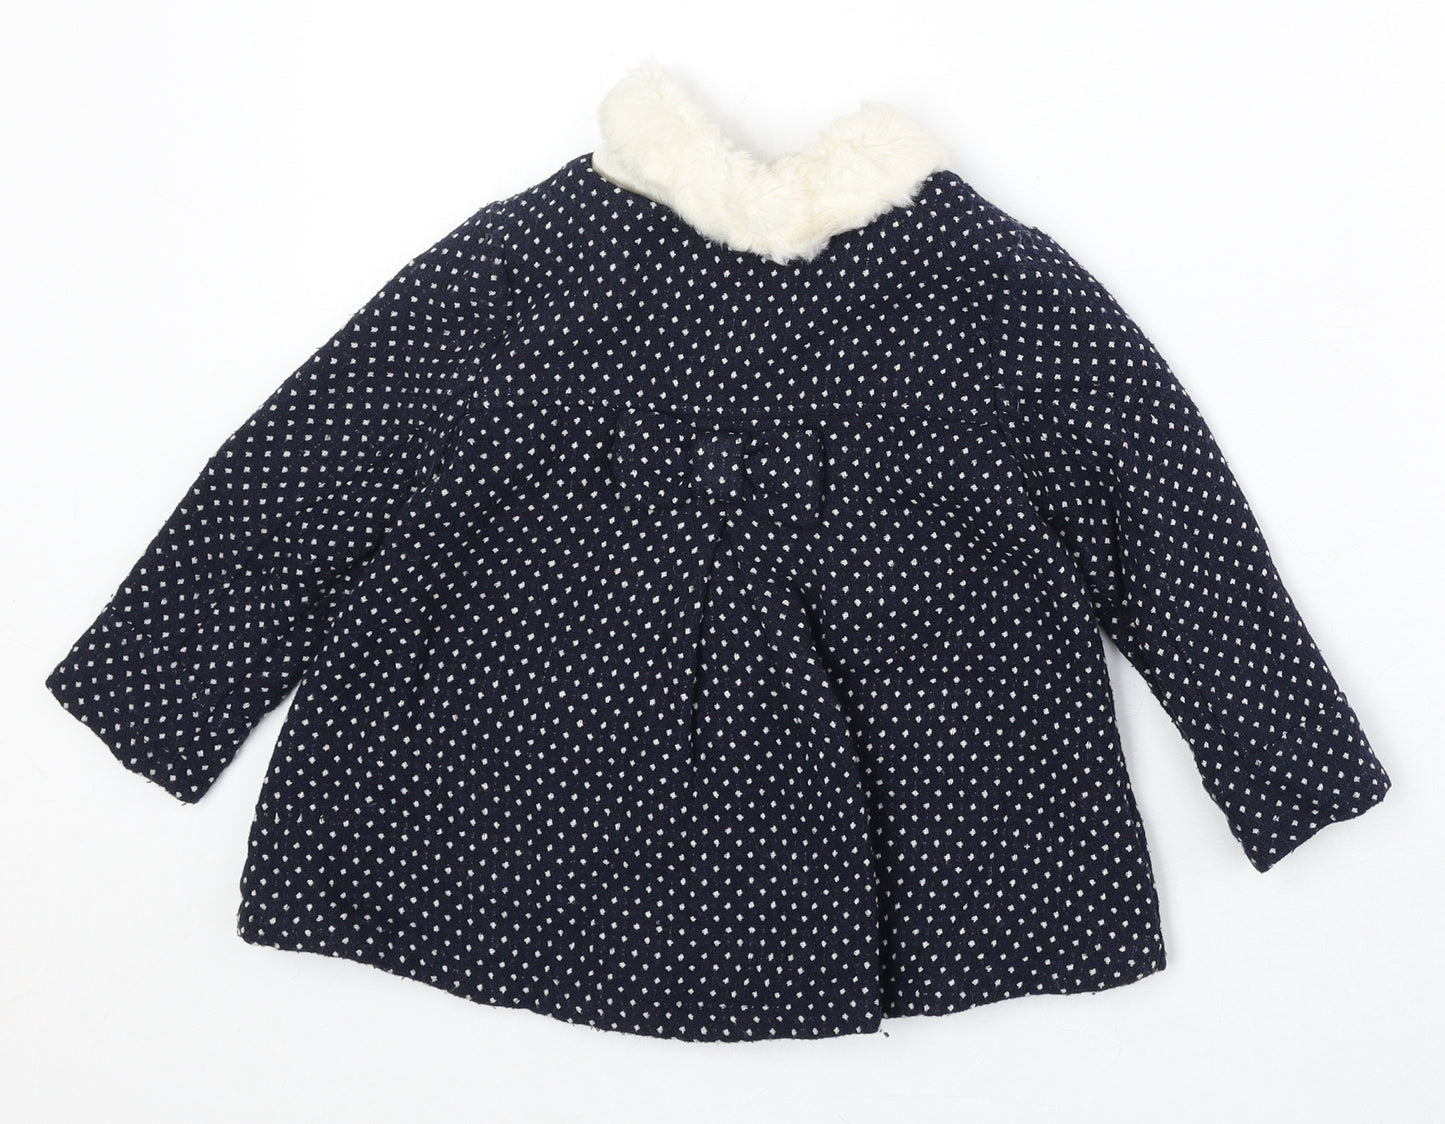 Mothercare Girls Black Polka Dot Jacket Size 2-3 Years Button